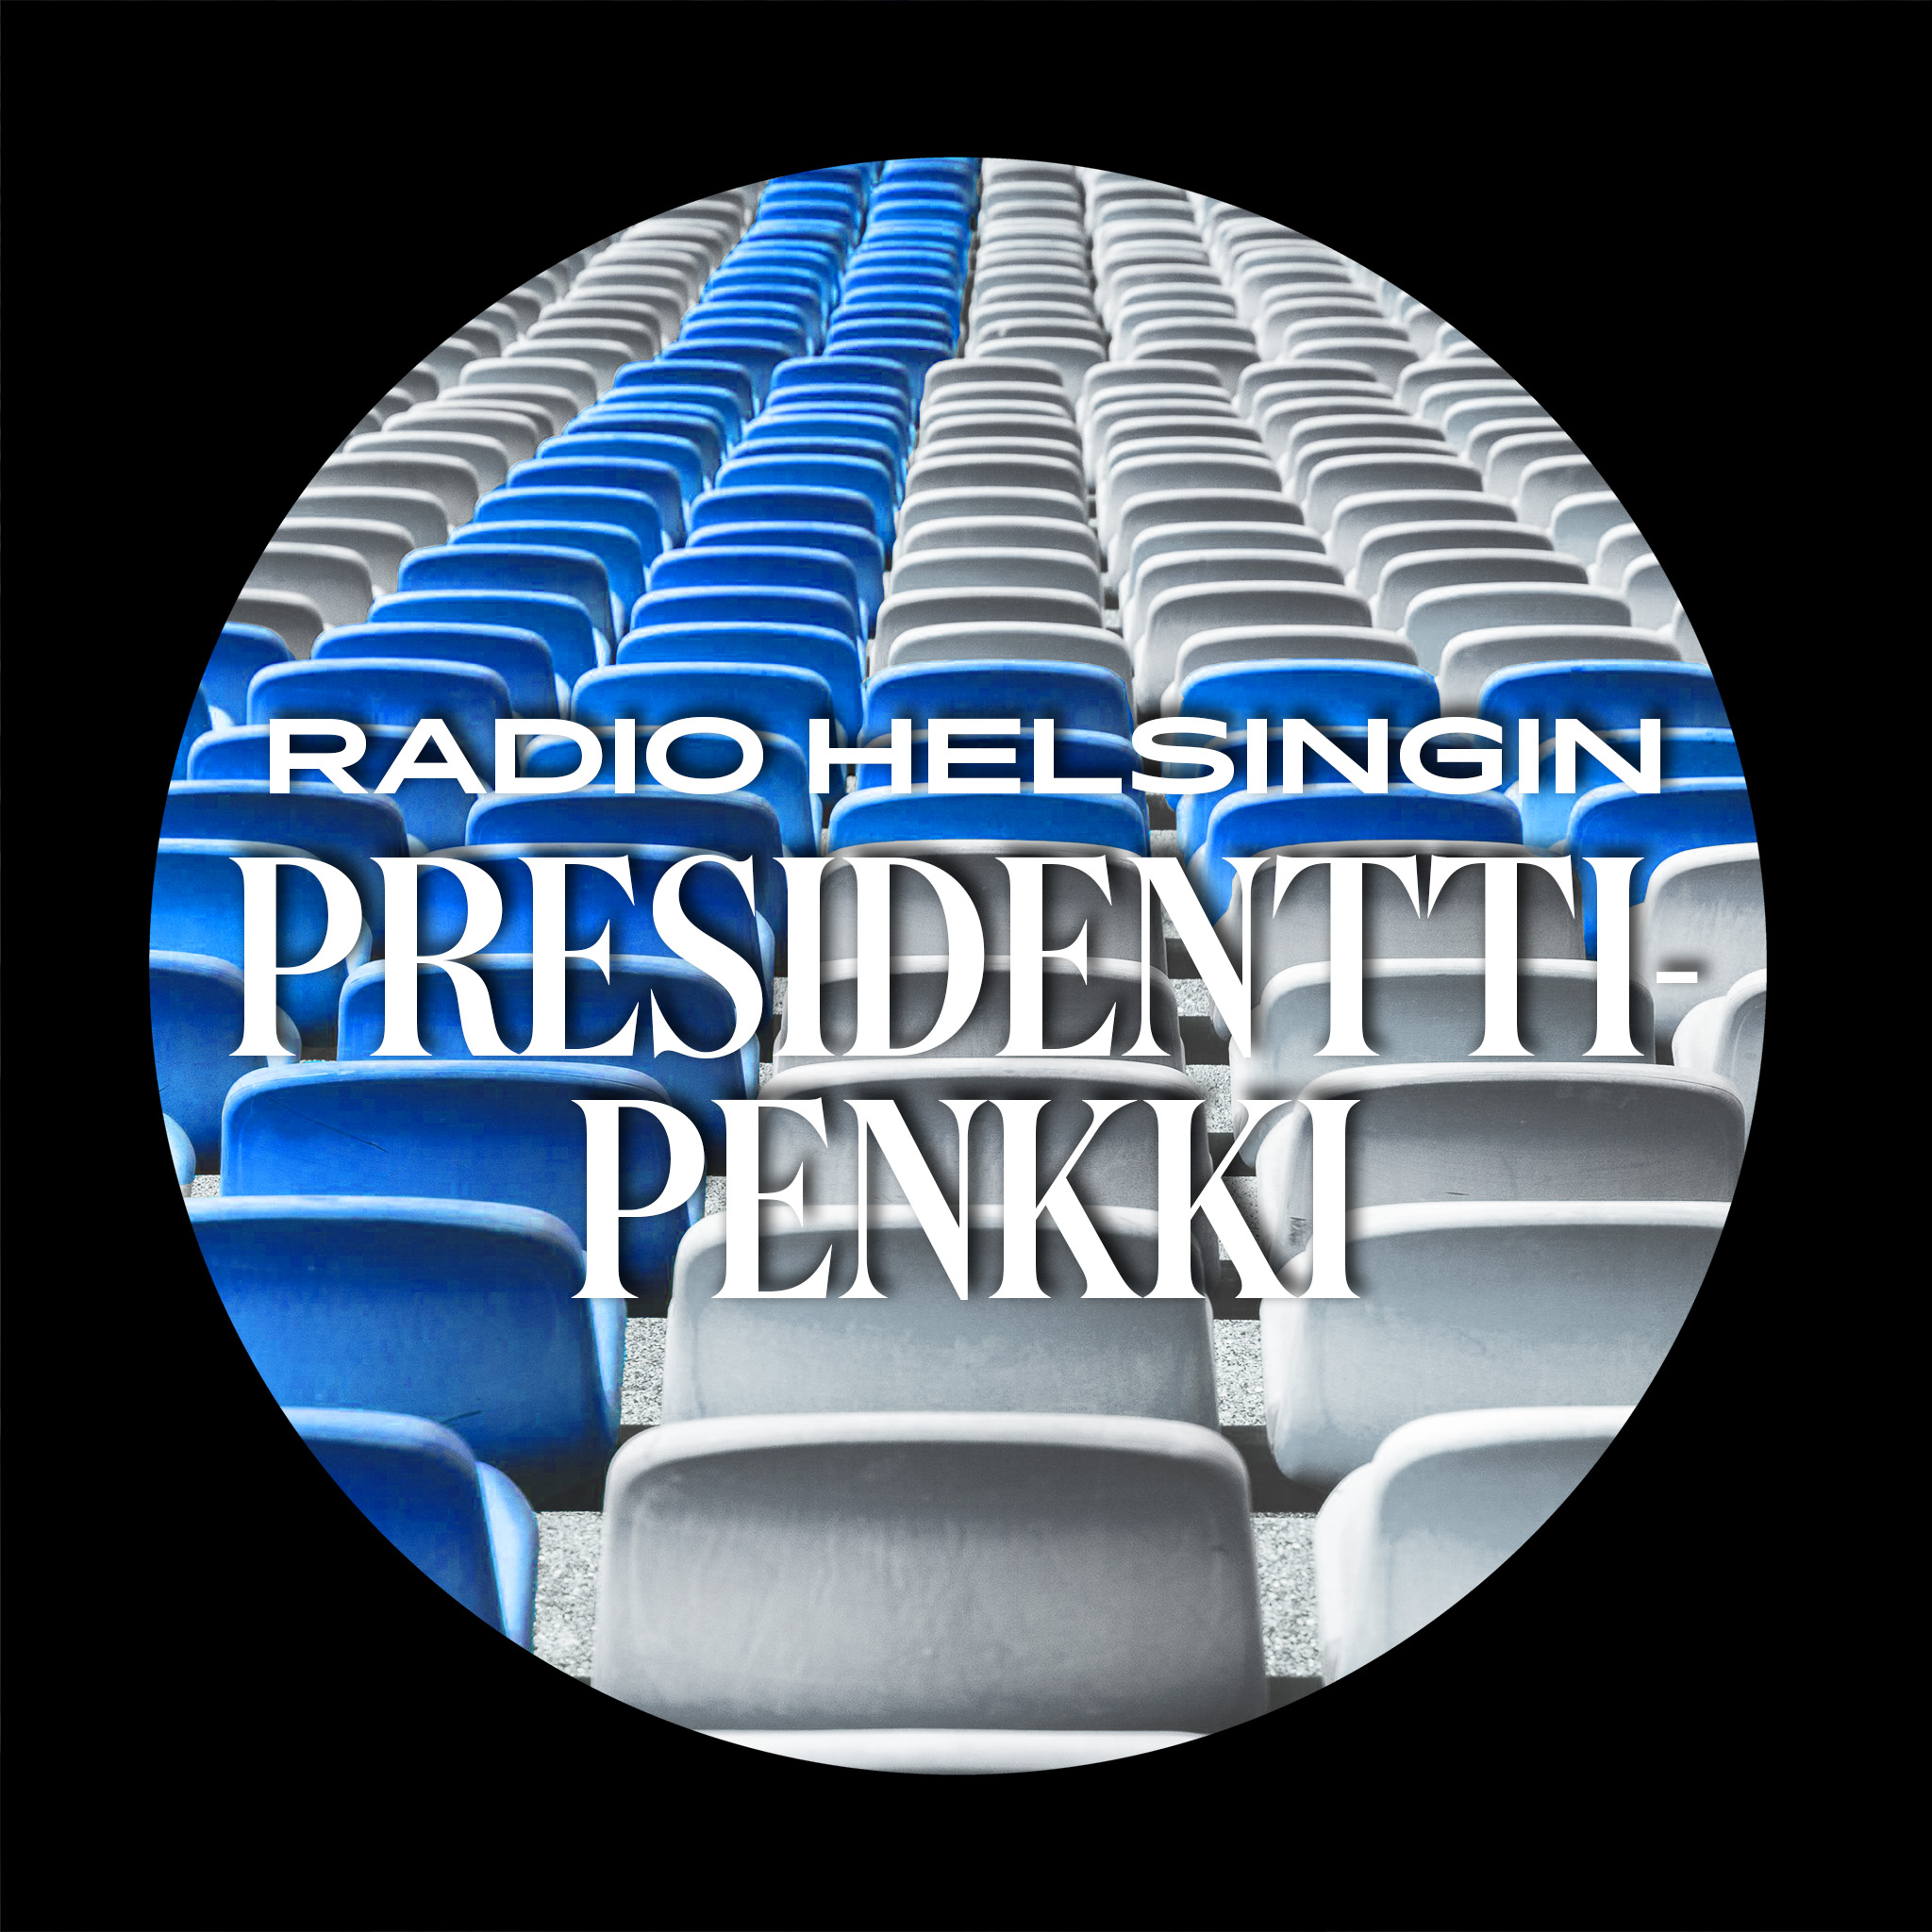 www.radiohelsinki.fi